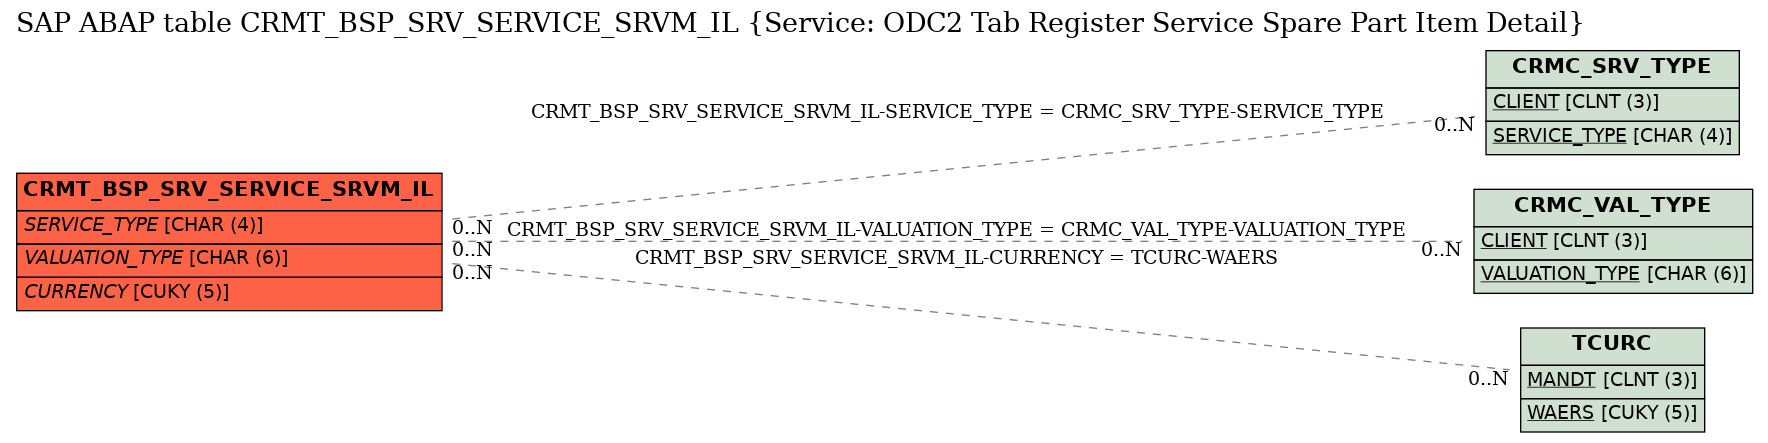 E-R Diagram for table CRMT_BSP_SRV_SERVICE_SRVM_IL (Service: ODC2 Tab Register Service Spare Part Item Detail)